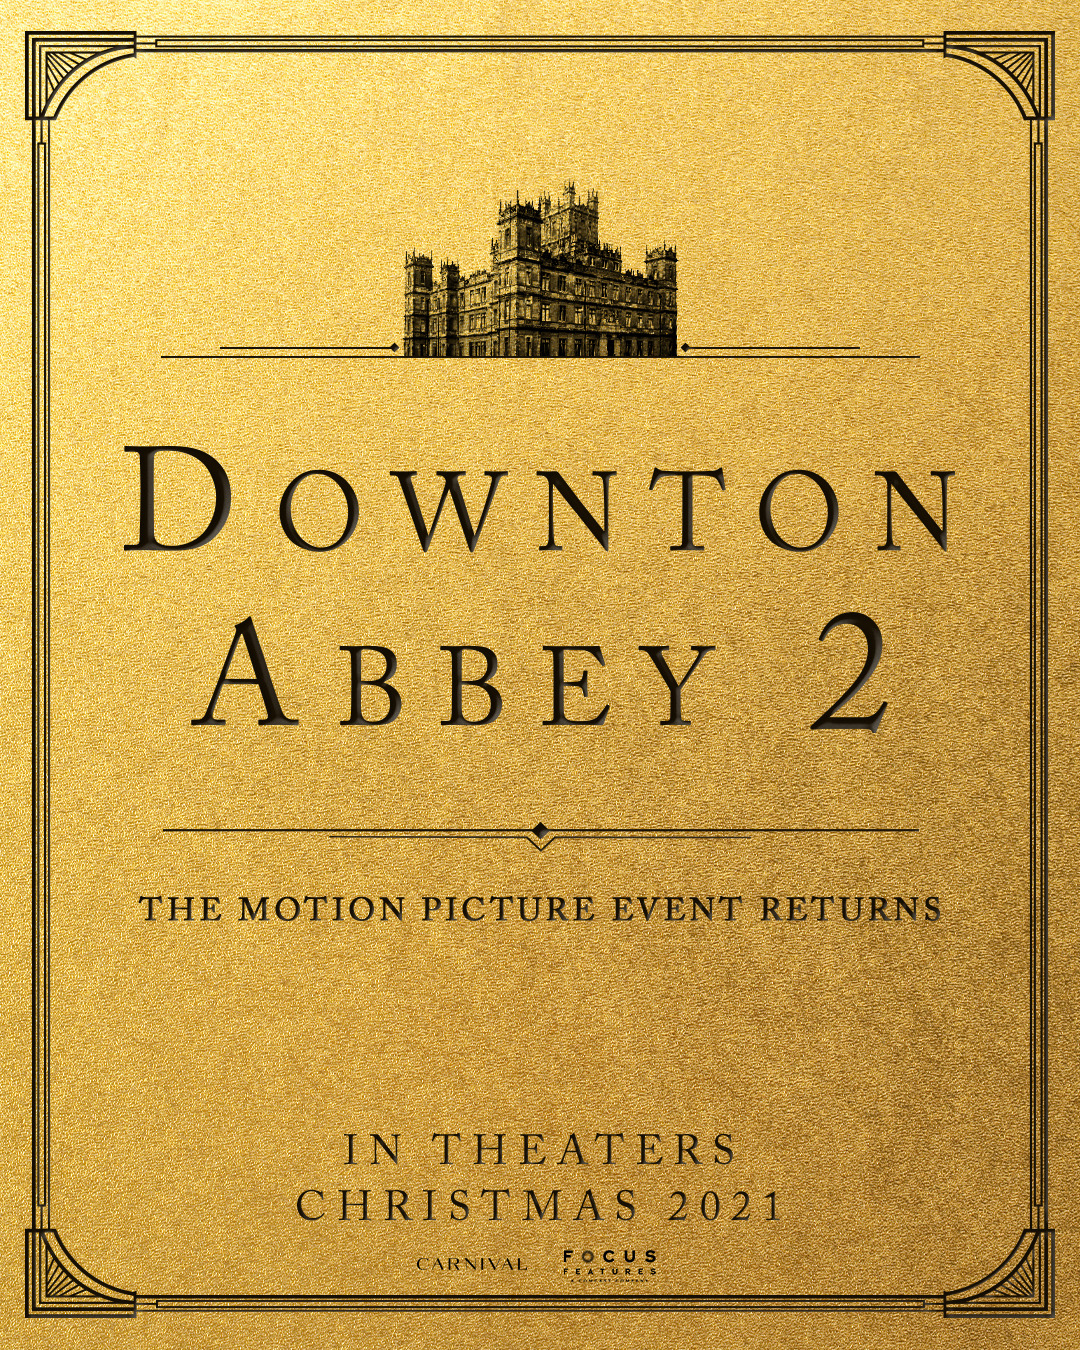 Downton Abbey 2 notice